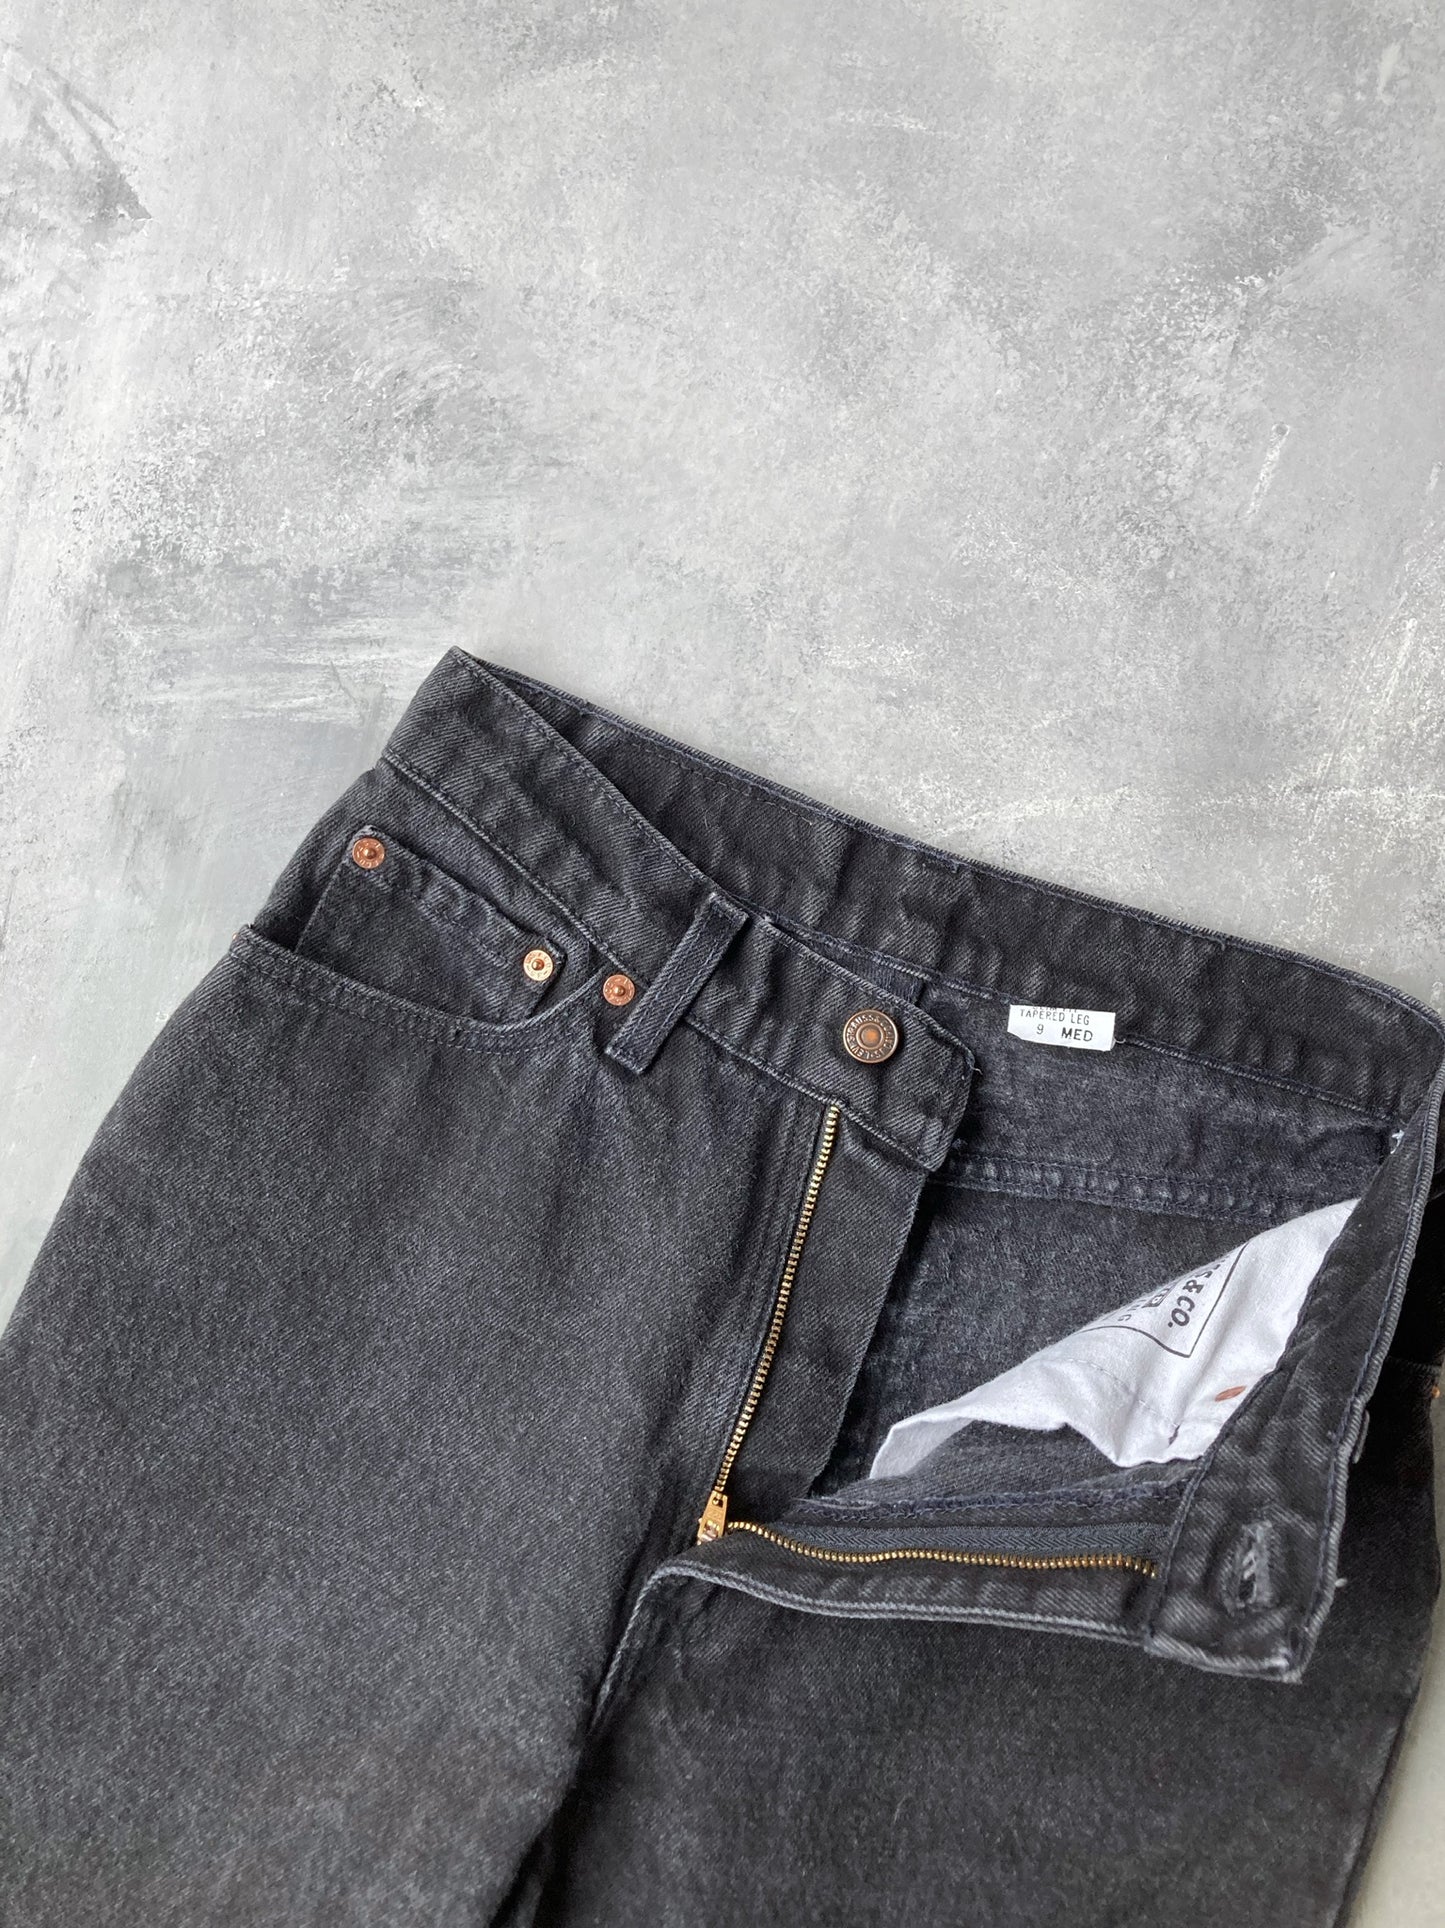 Levi's 512 Slim Fit Jeans 90's- Size 0